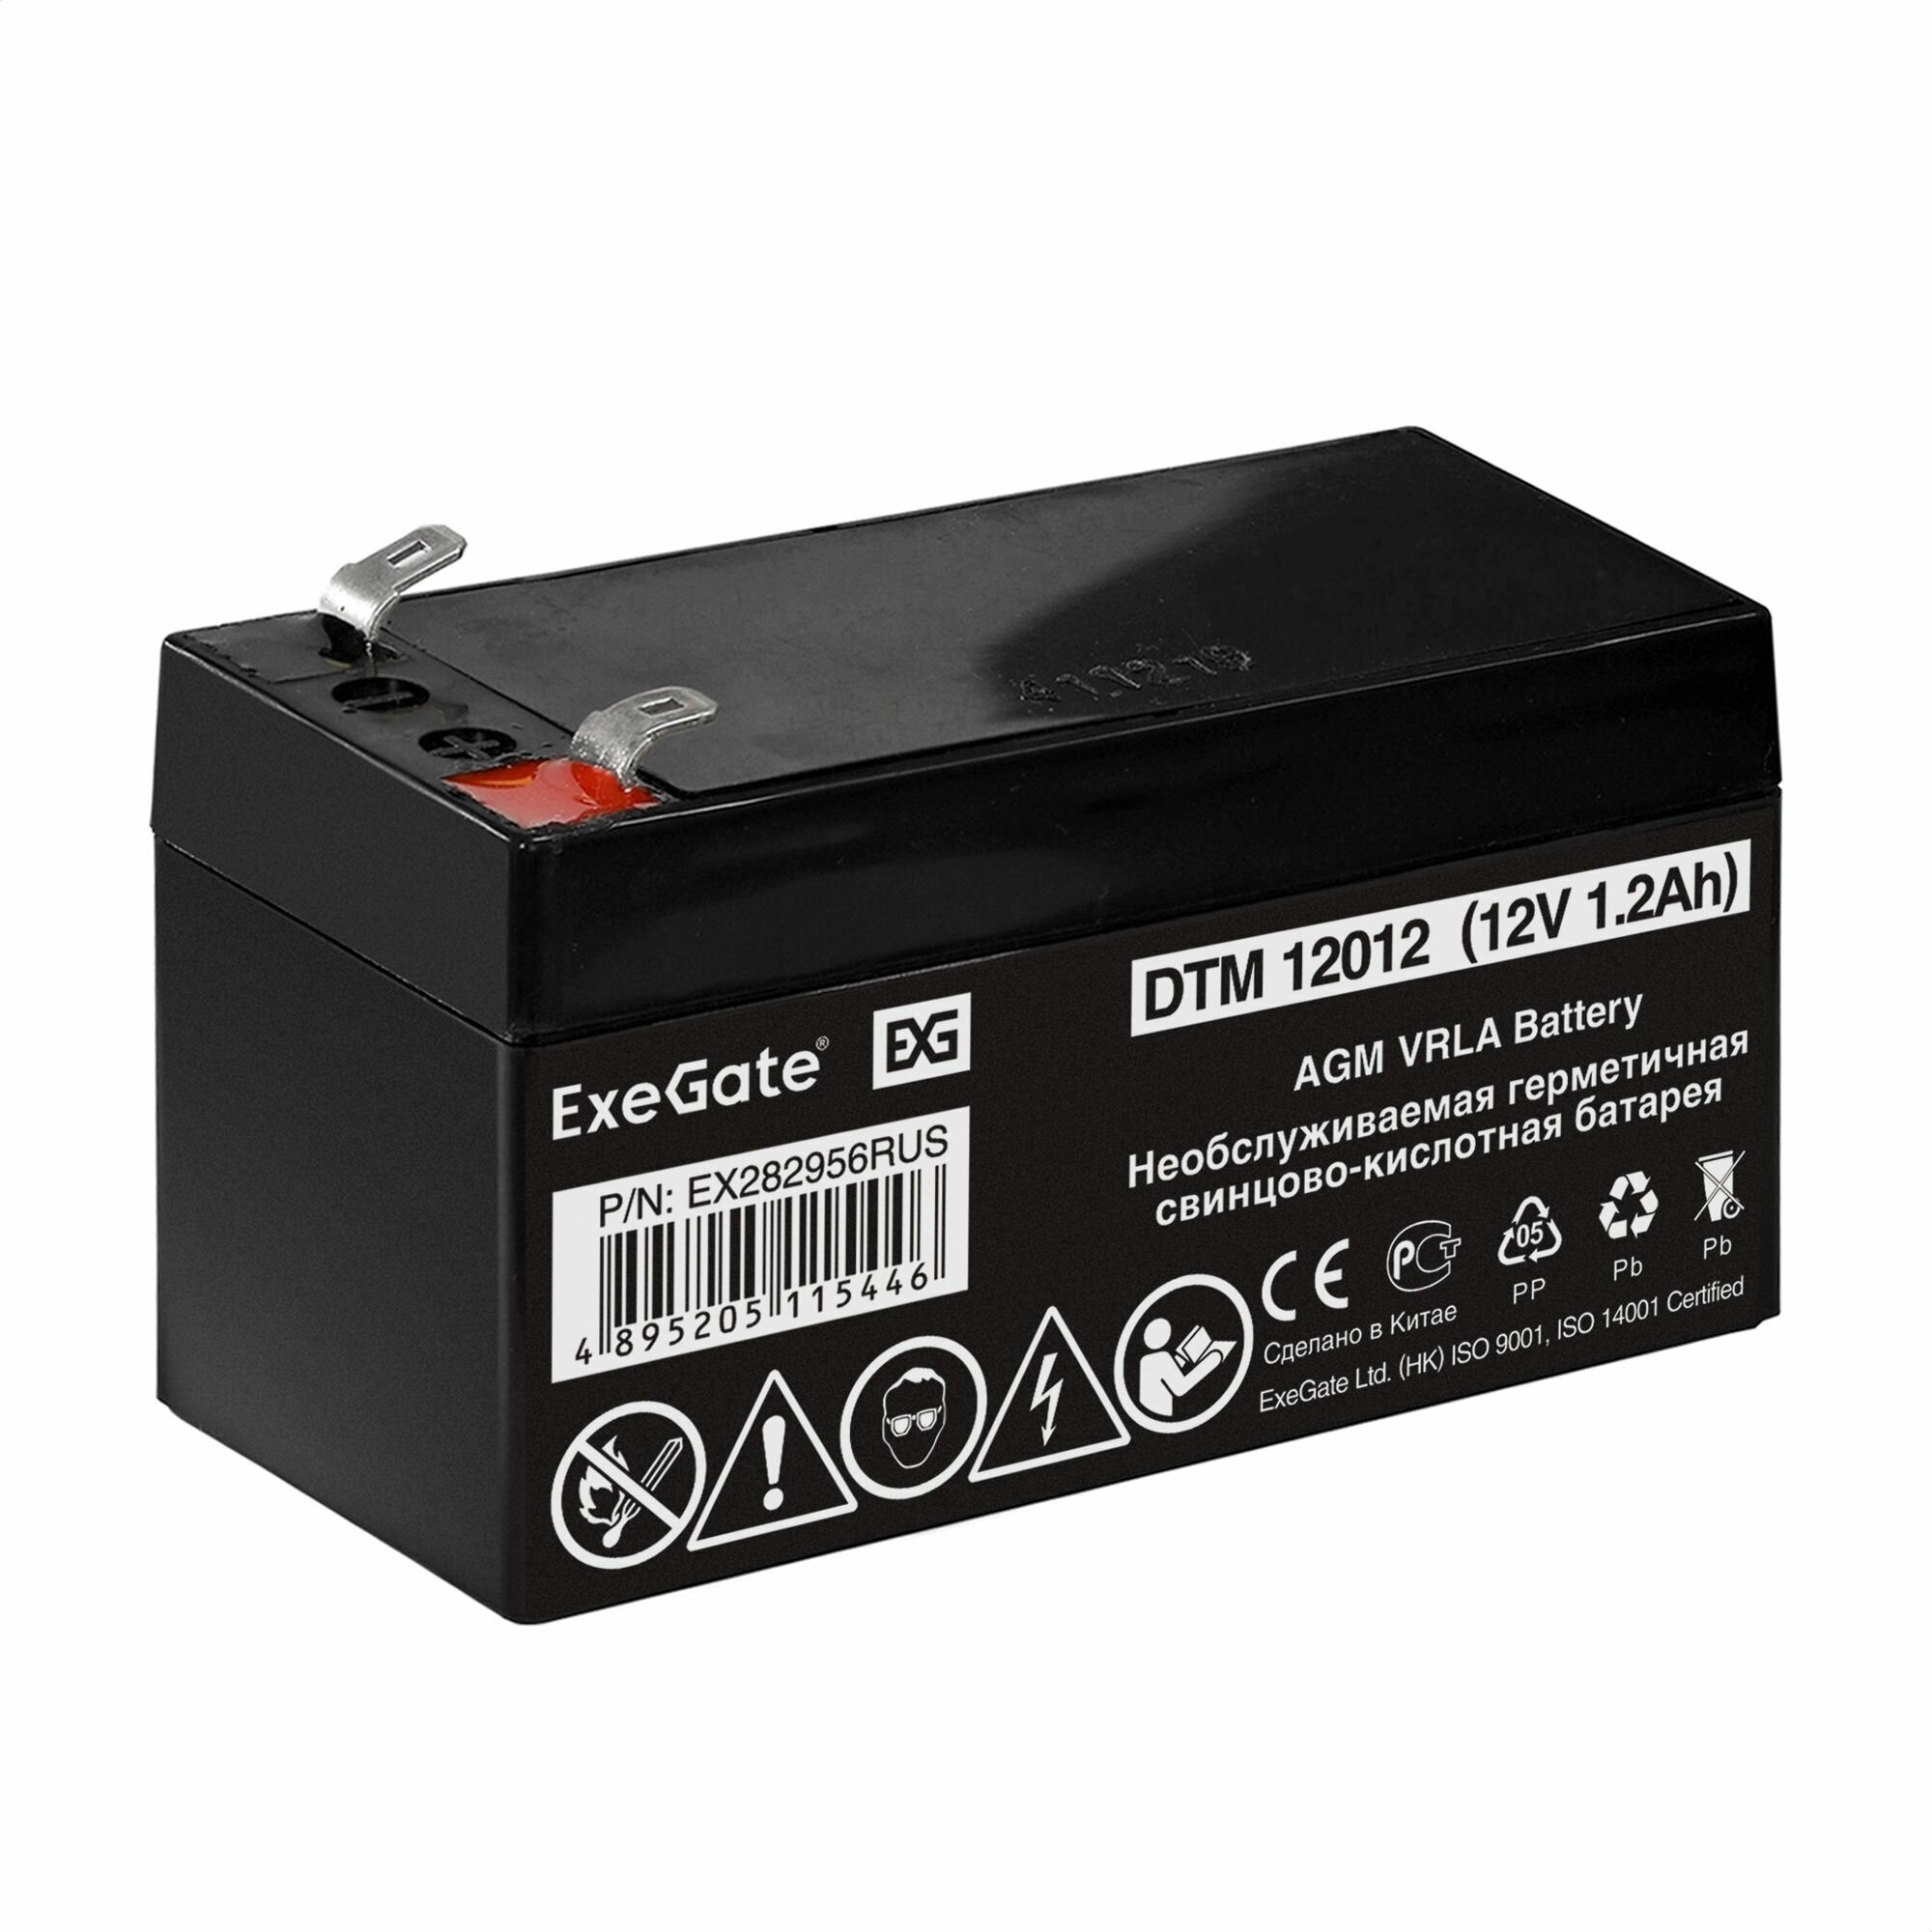 Exegate EX282956RUS Exegate EX282956RUS Аккумуляторная батарея ExeGate DTM 12012 (12V 1.2Ah) клеммы F1